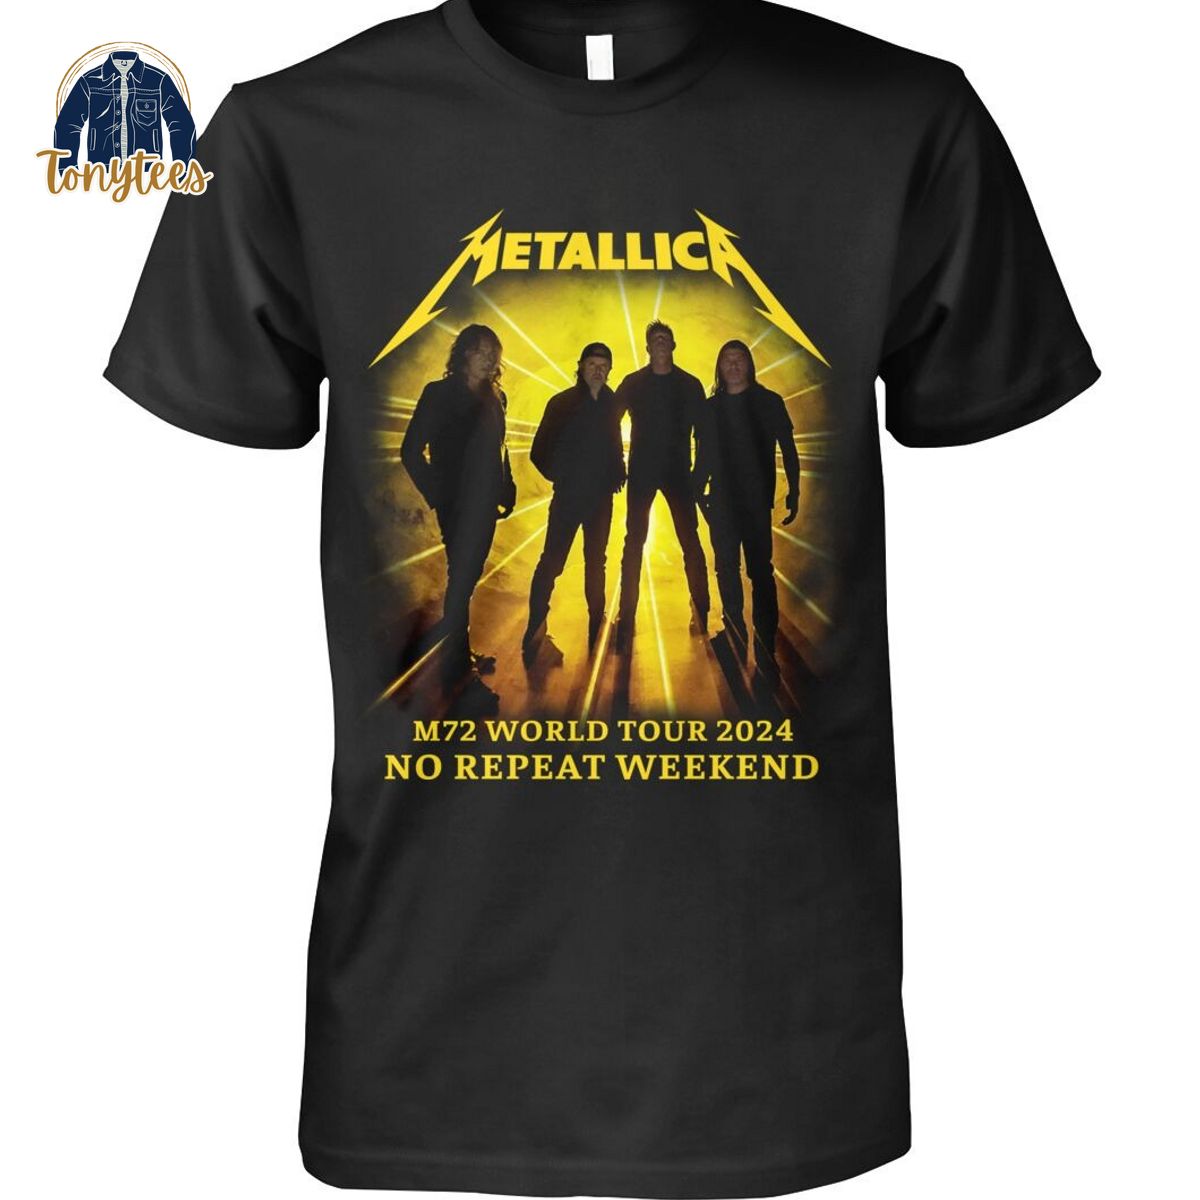 Metallica M72 world tour 2024 no repeat weekend shirt